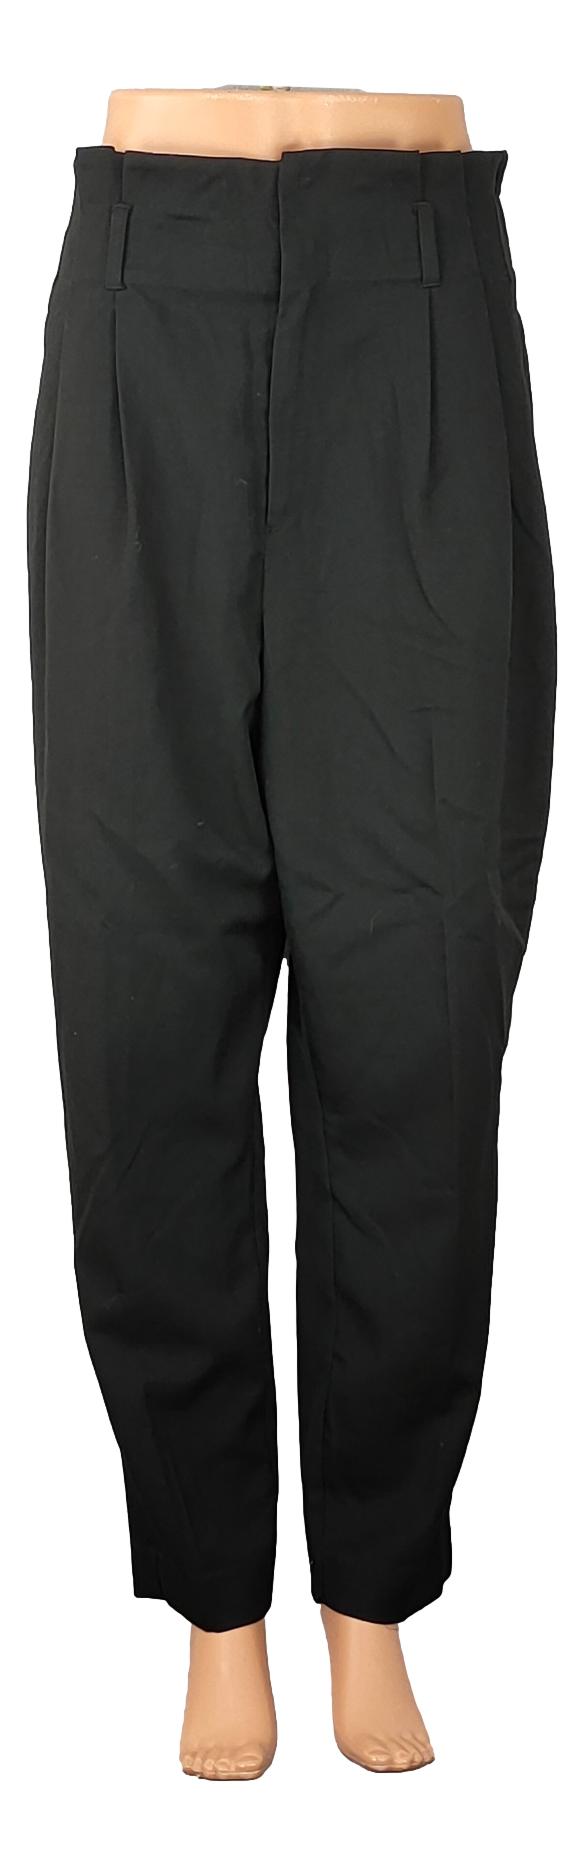 Pantalon H&M - Taille 42